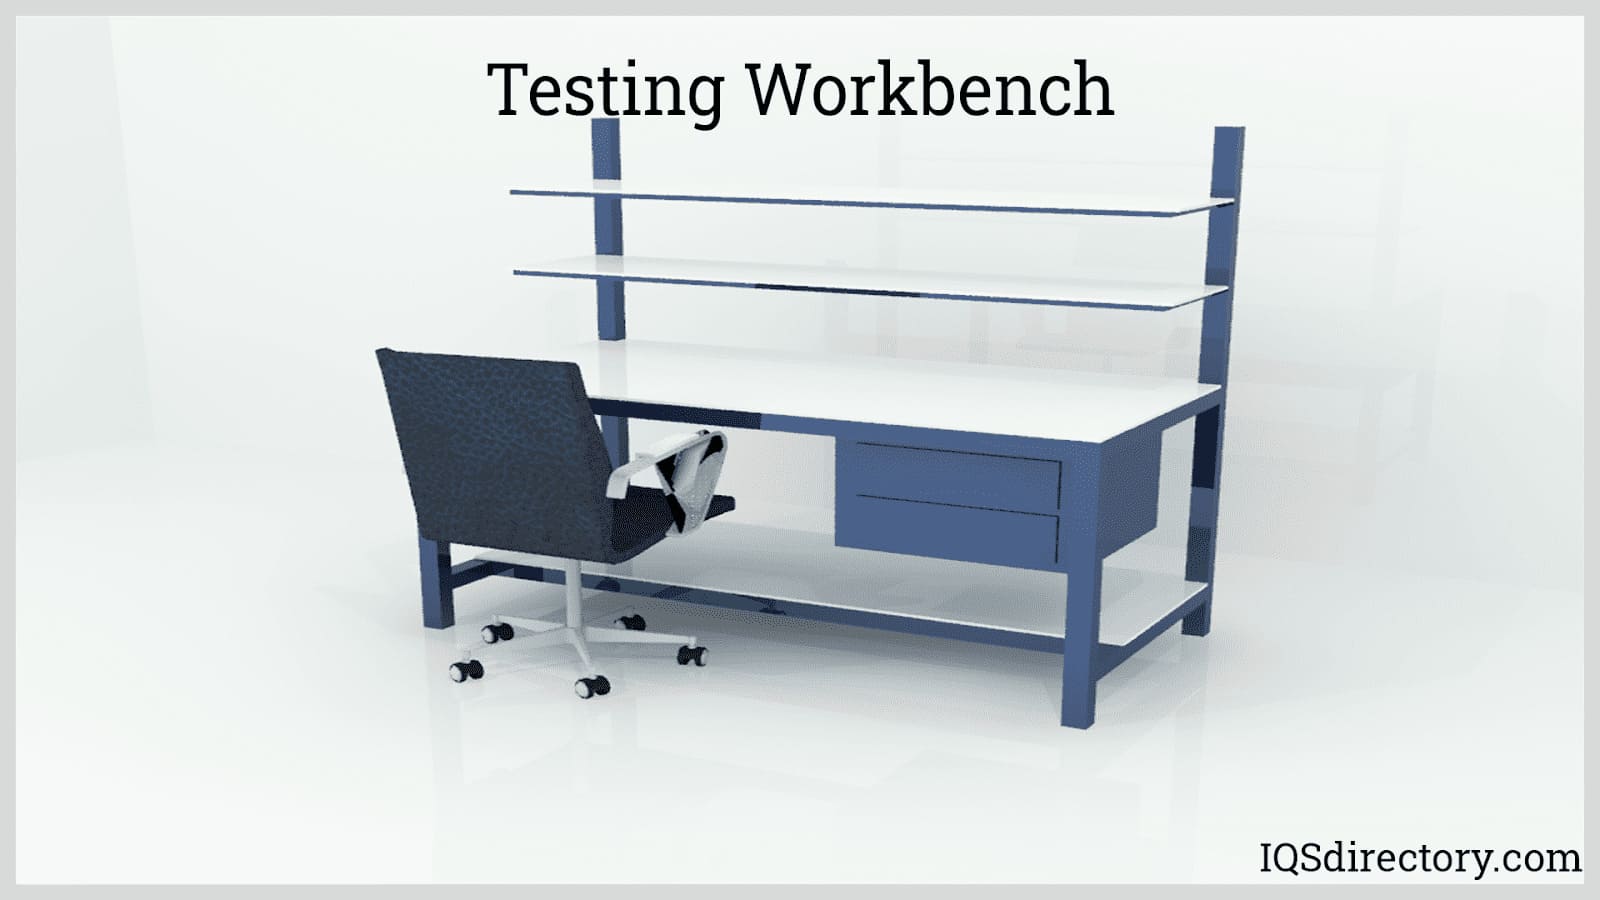 Testing Workbench